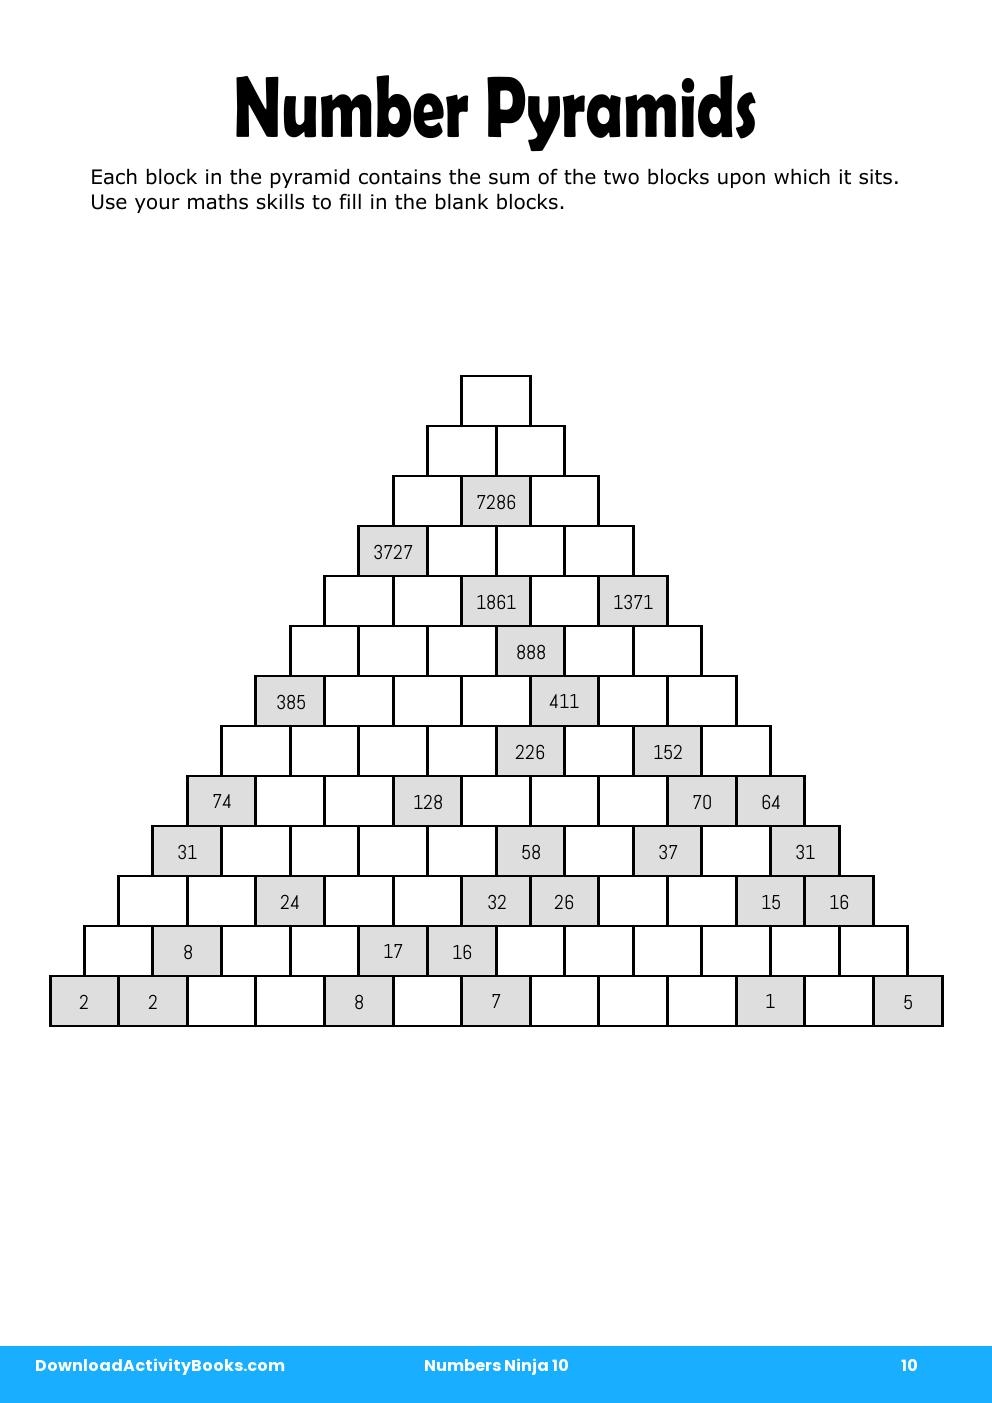 Number Pyramids in Numbers Ninja 10